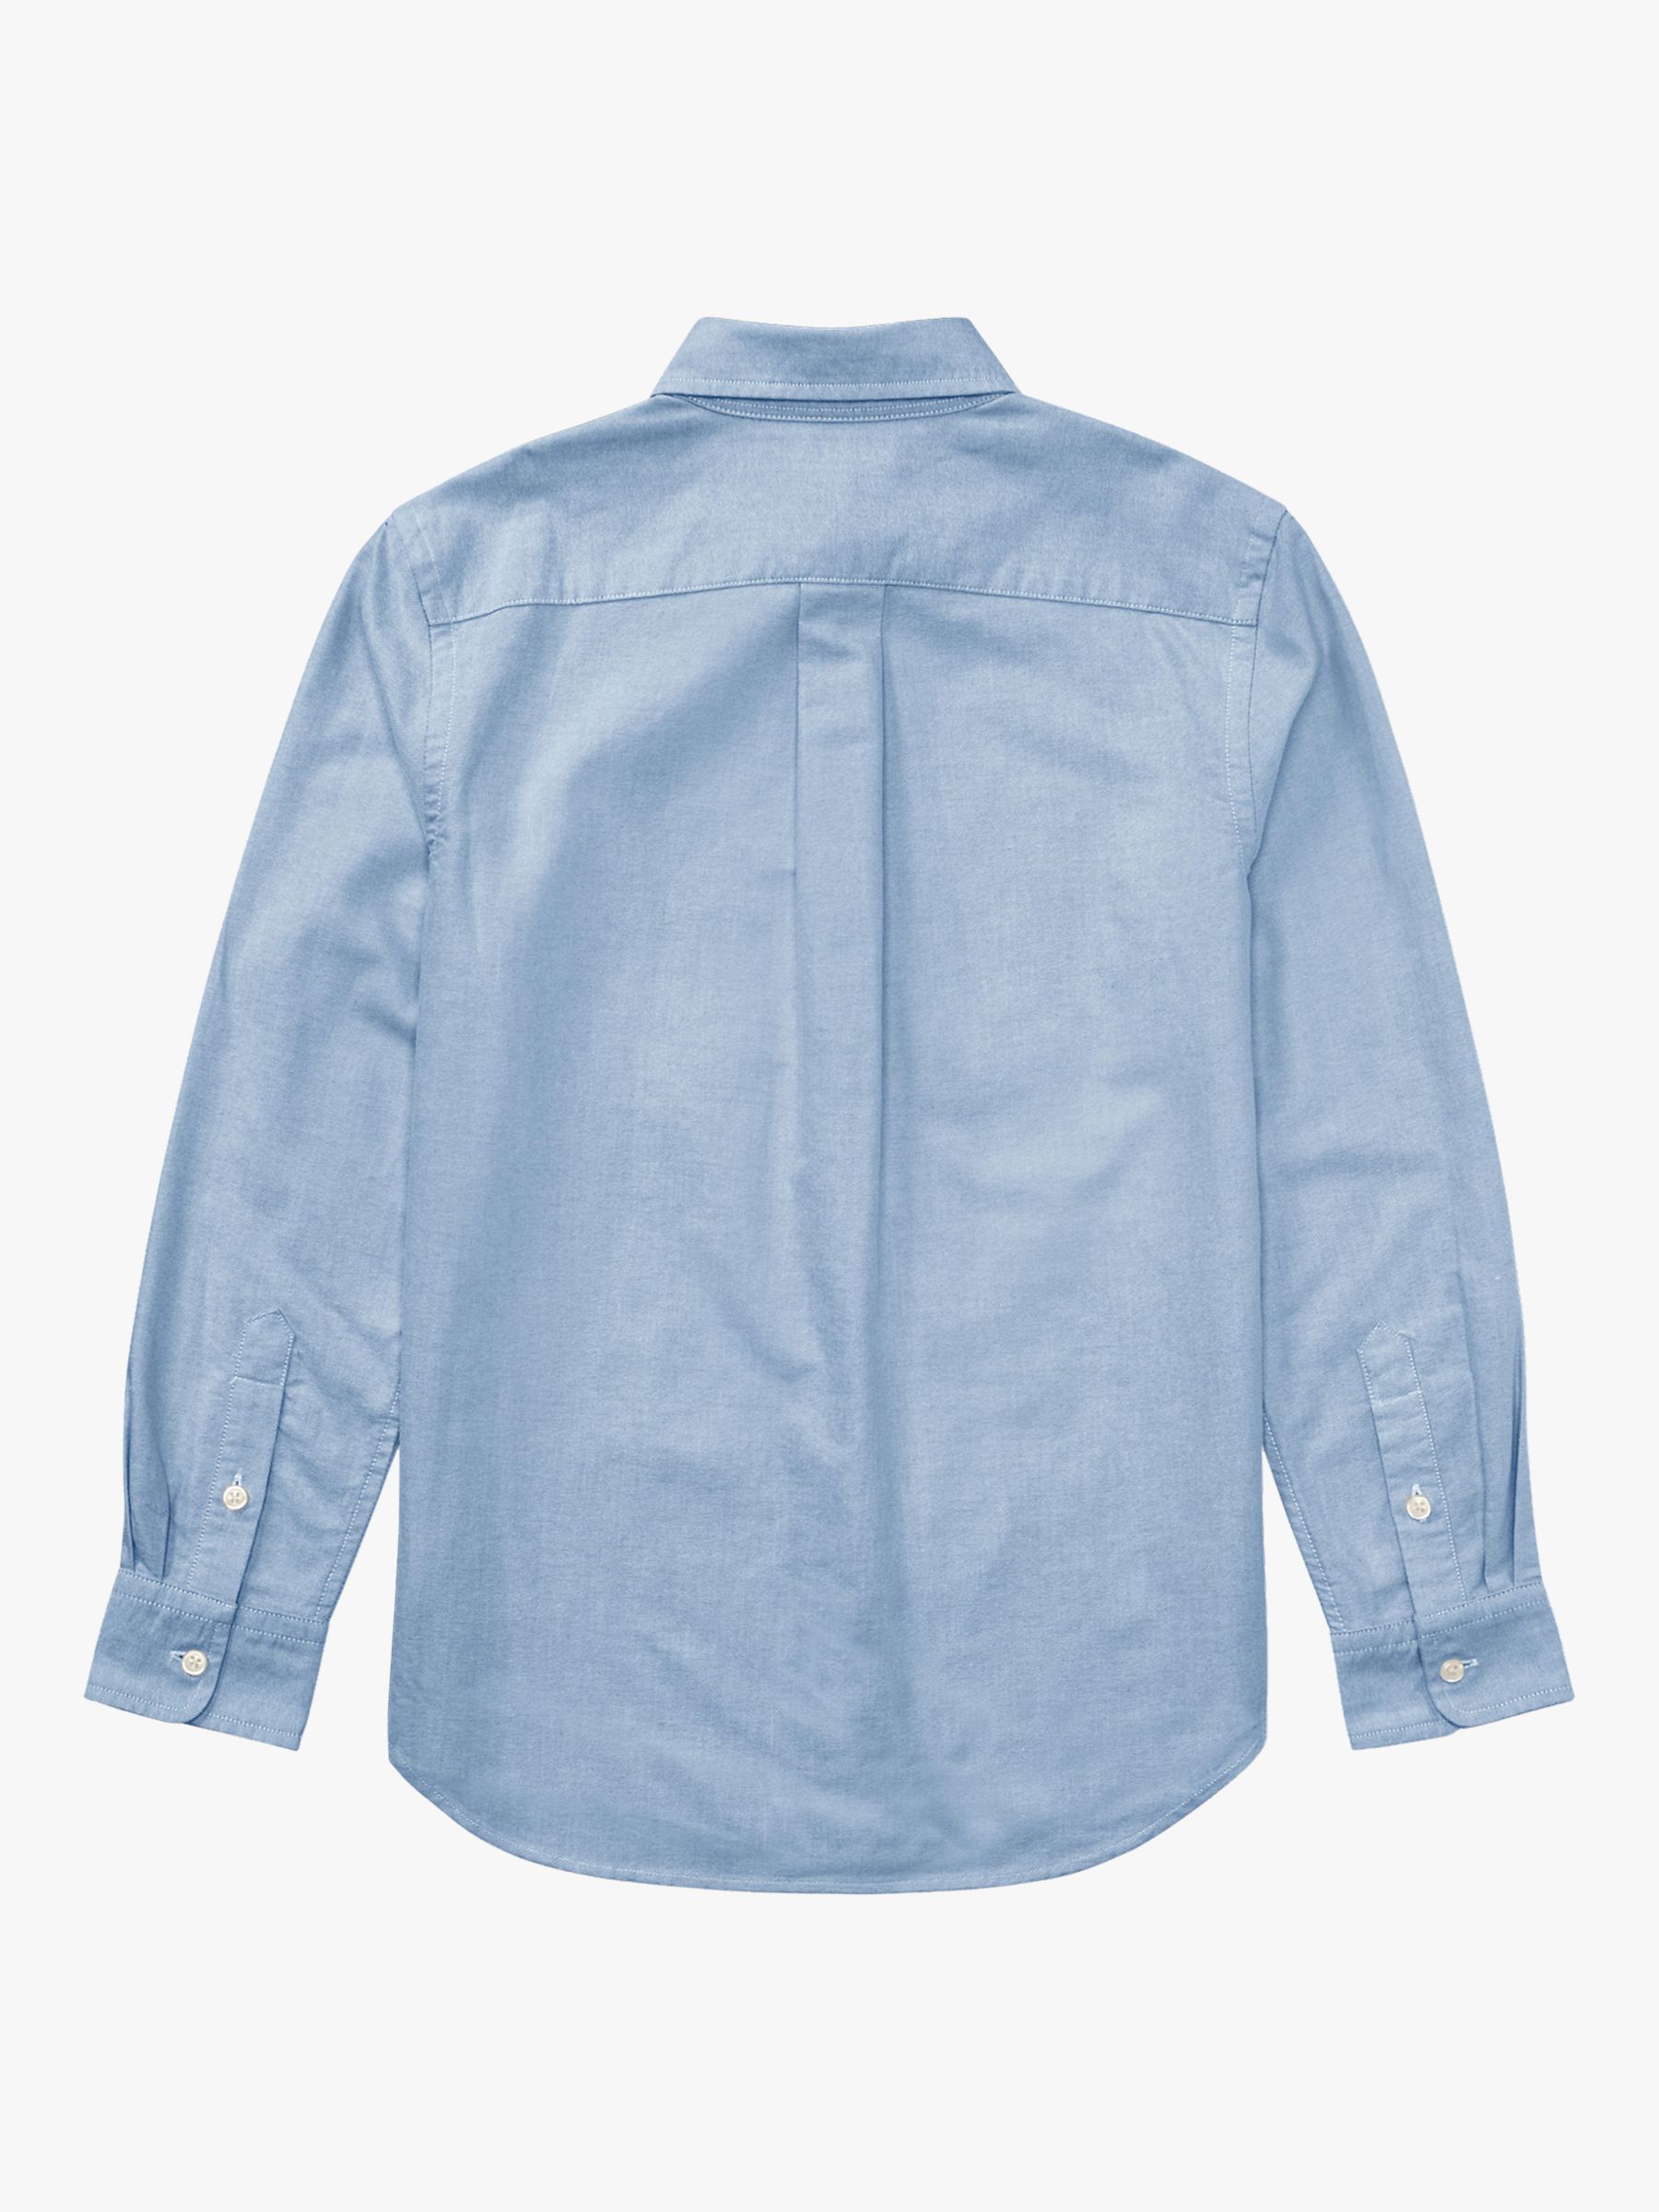 Polo Ralph Lauren Kids' Oxford Shirt, Blue, 2 years